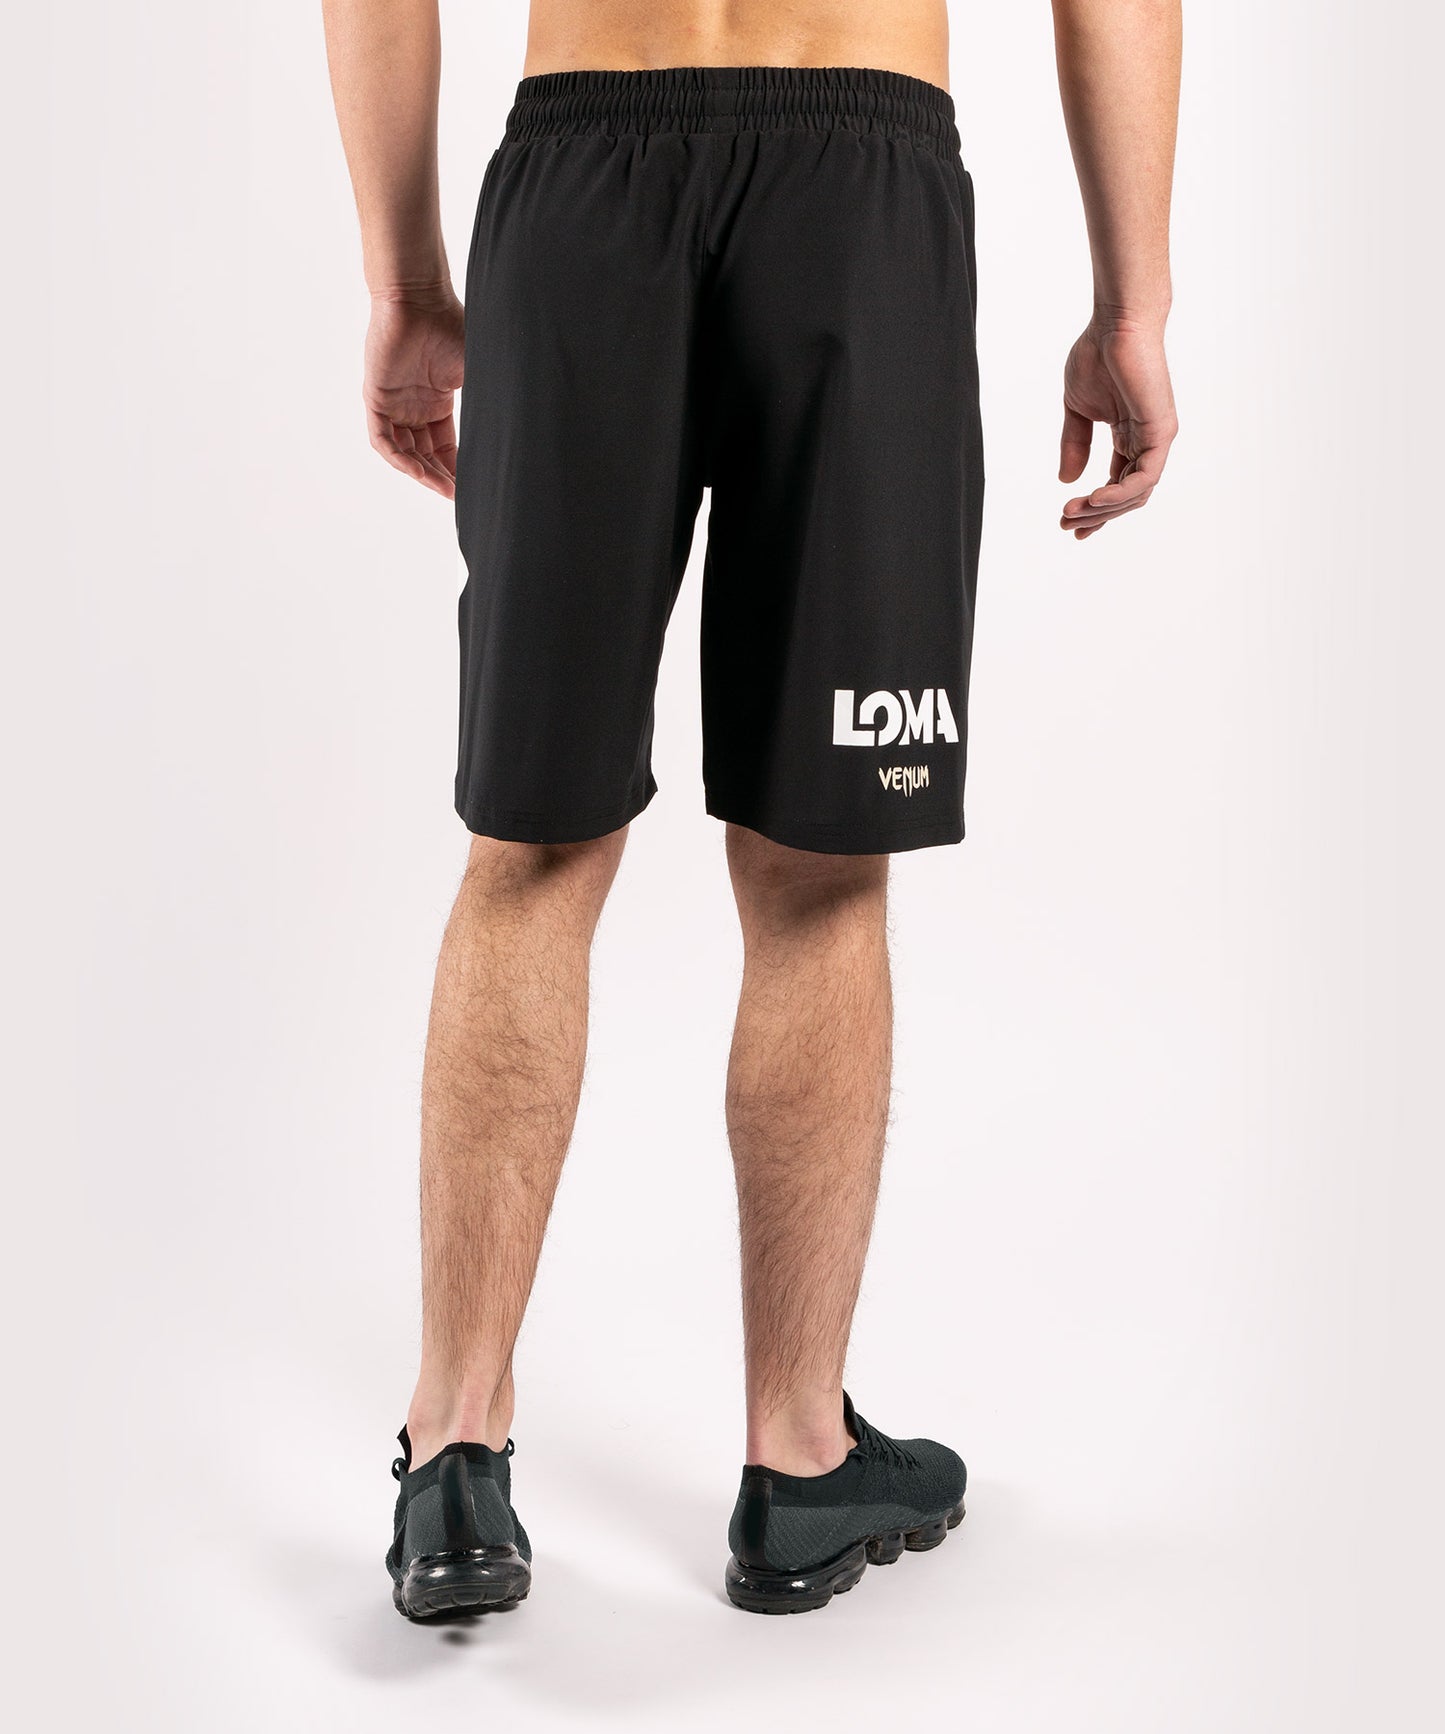 Venum Arrow Loma Signature Collection Training shorts - Black/White